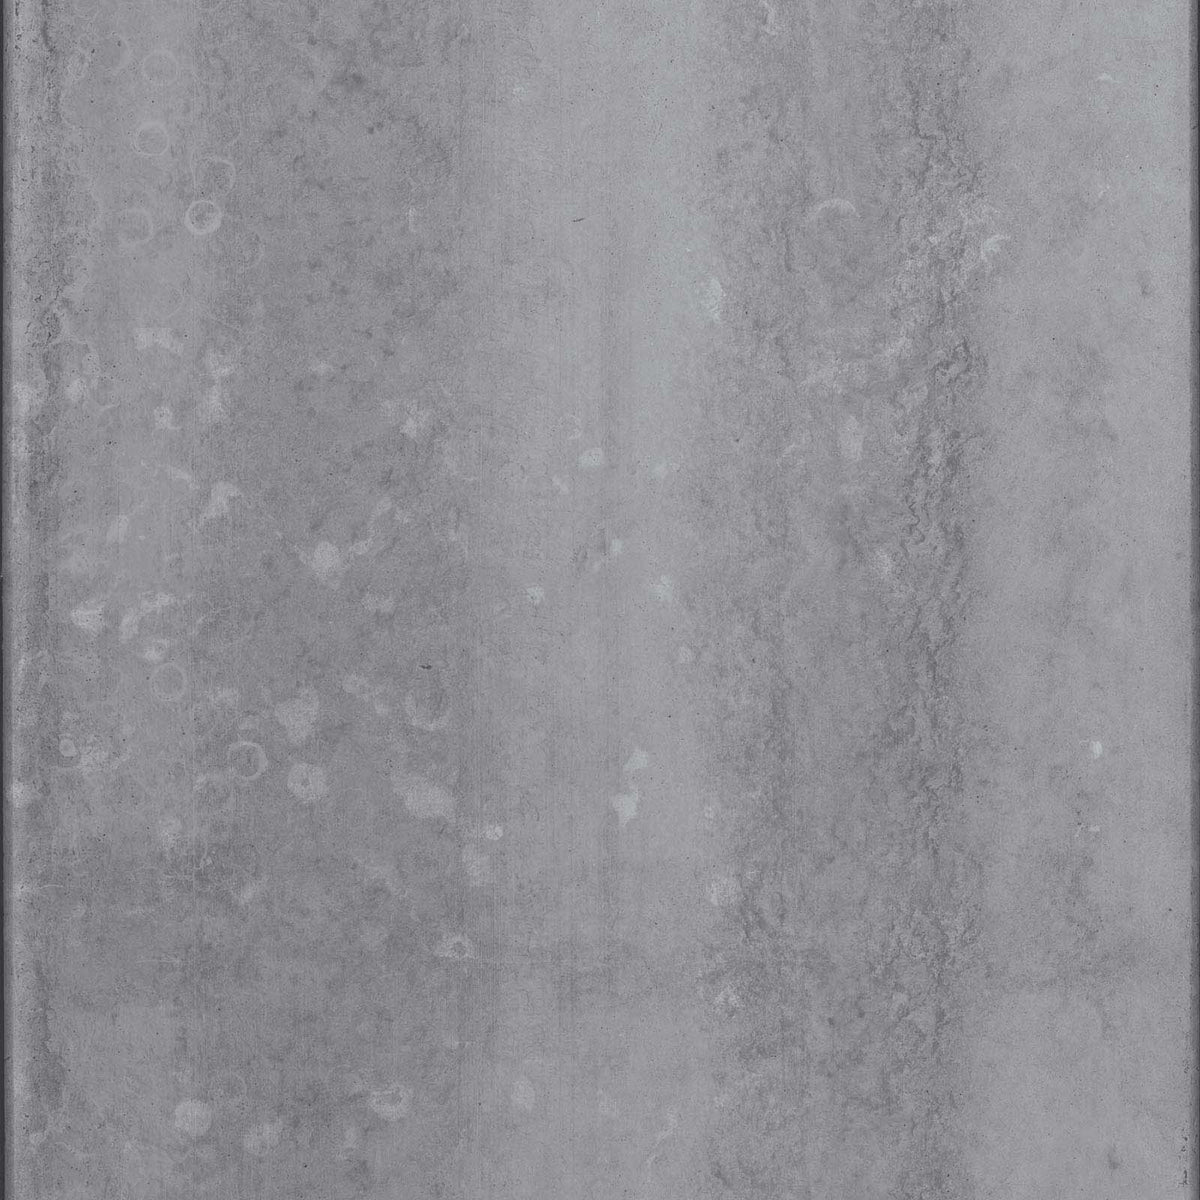 CON-04 Water Drops Concrete wallpaper by Piet Boon for NLXL